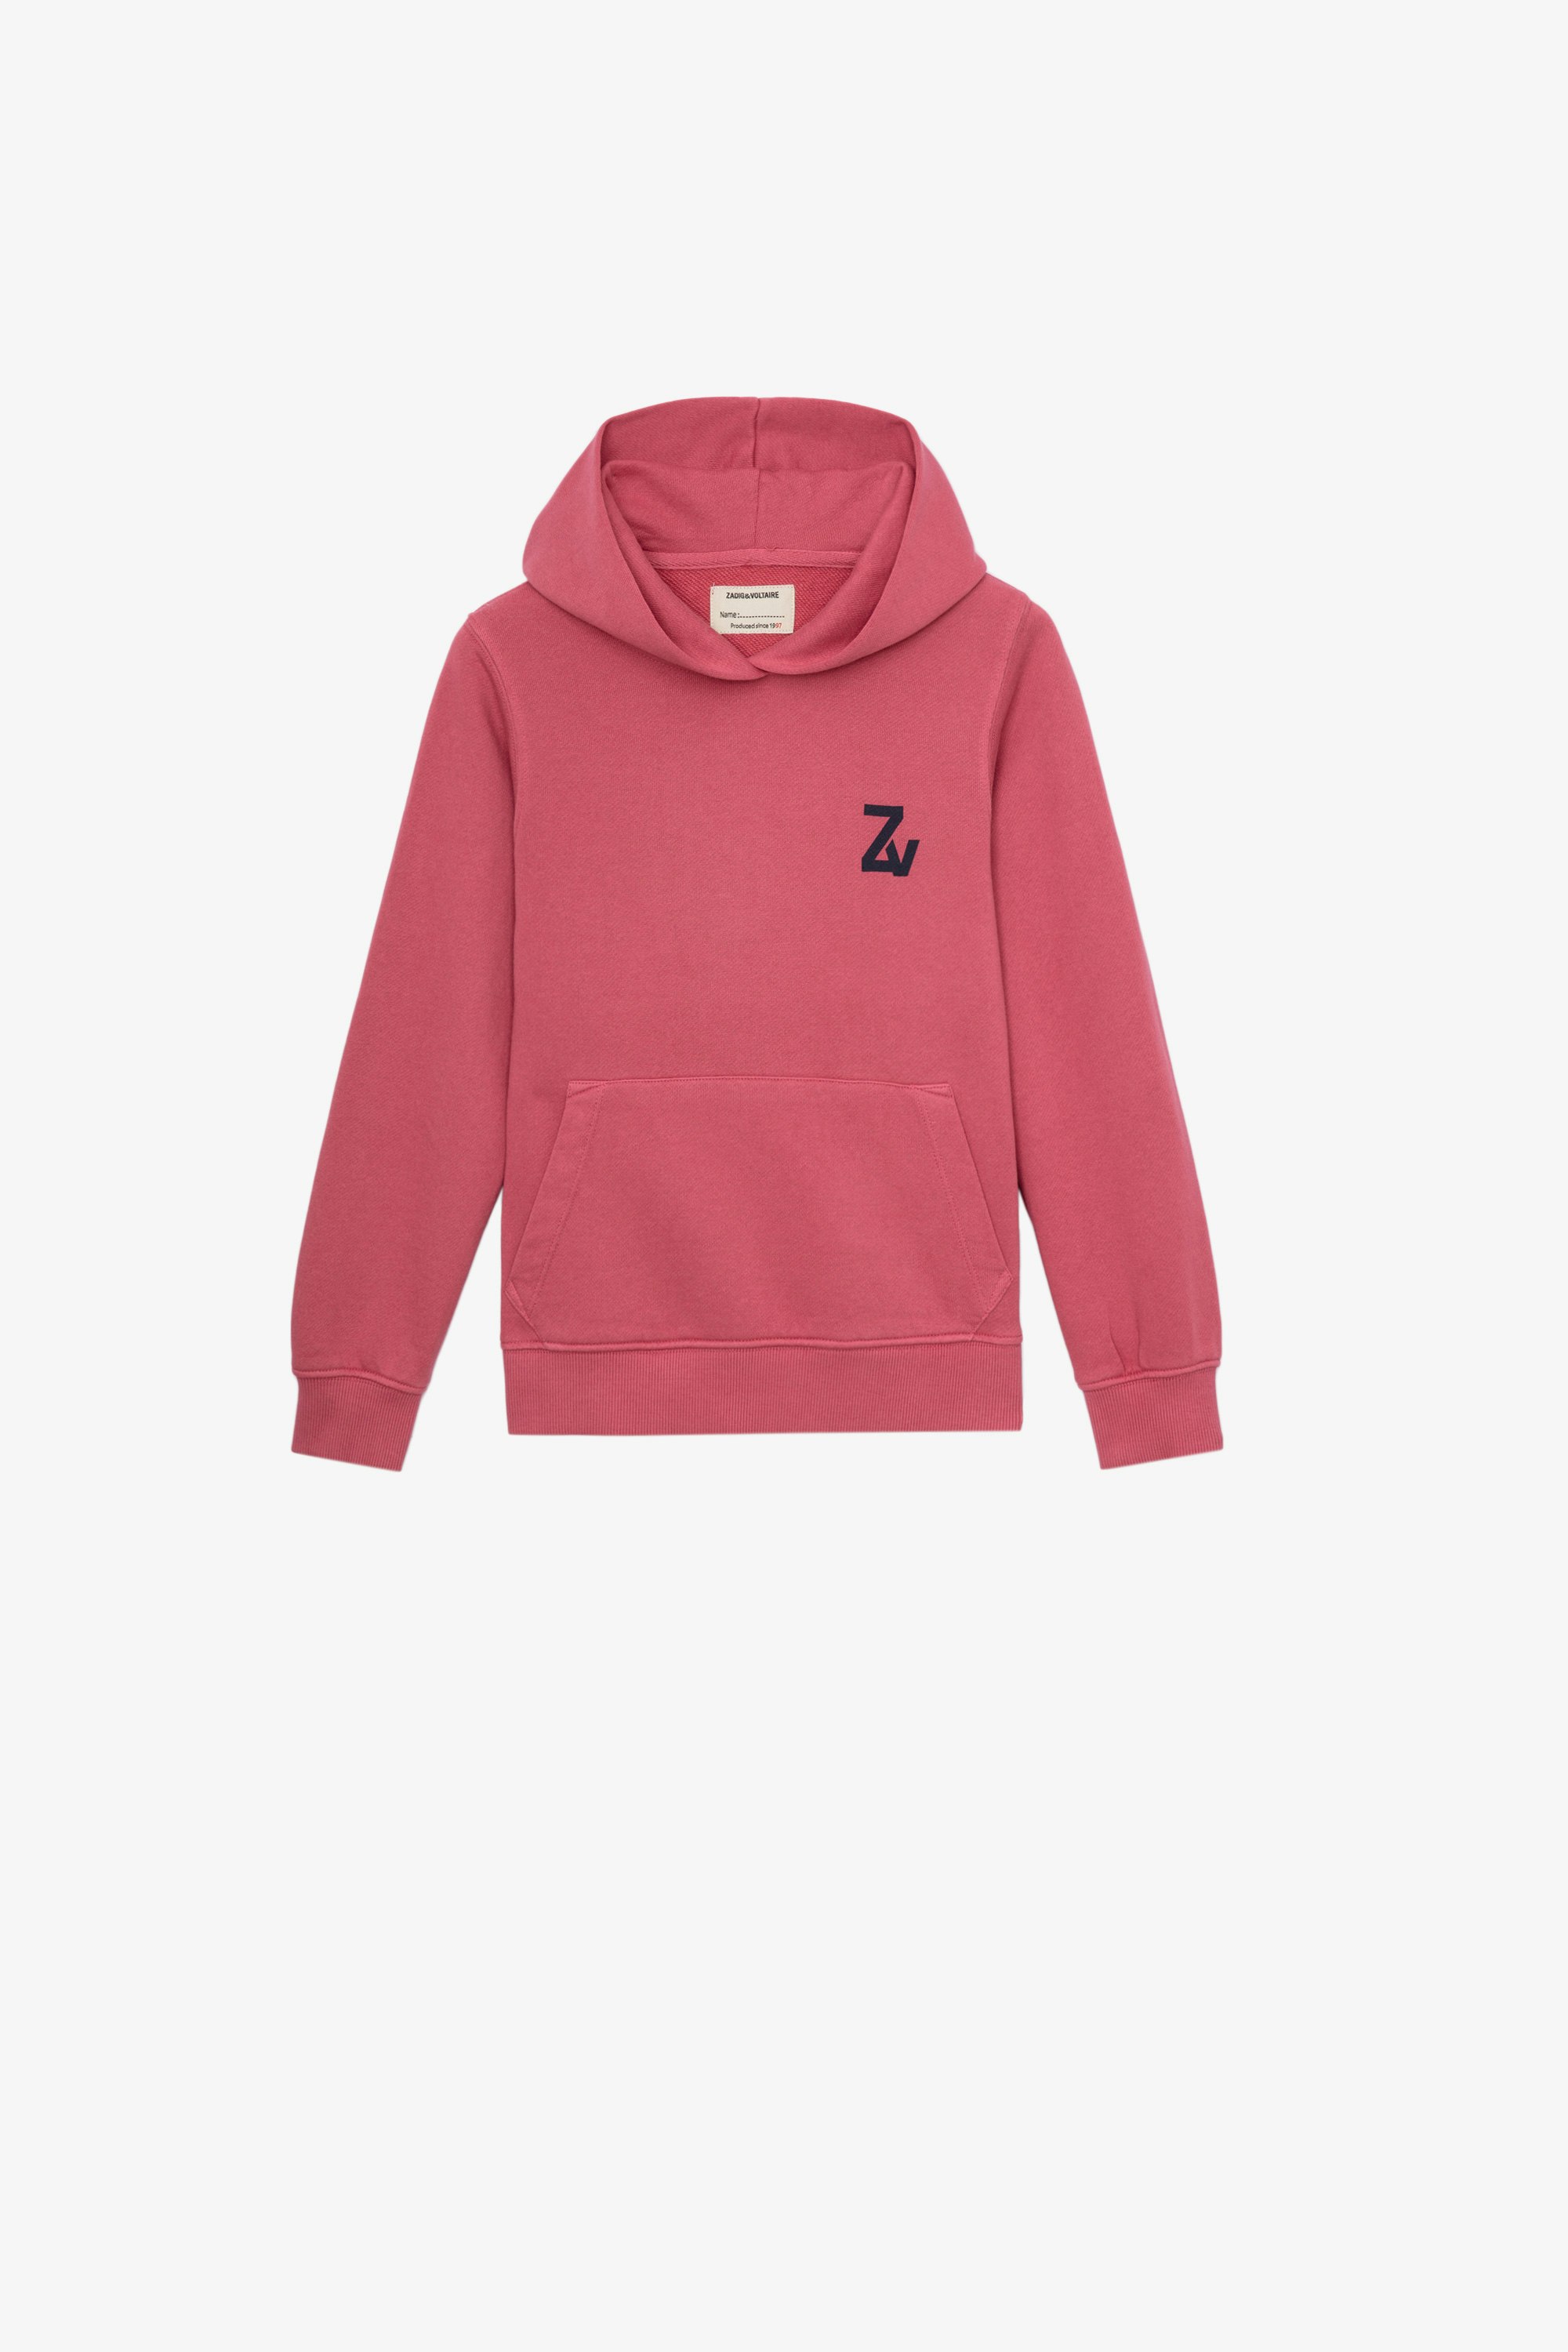 Sanchi Children’s Sweatshirt Children’s pink cotton hoodie with ZV signature and photo print on back 